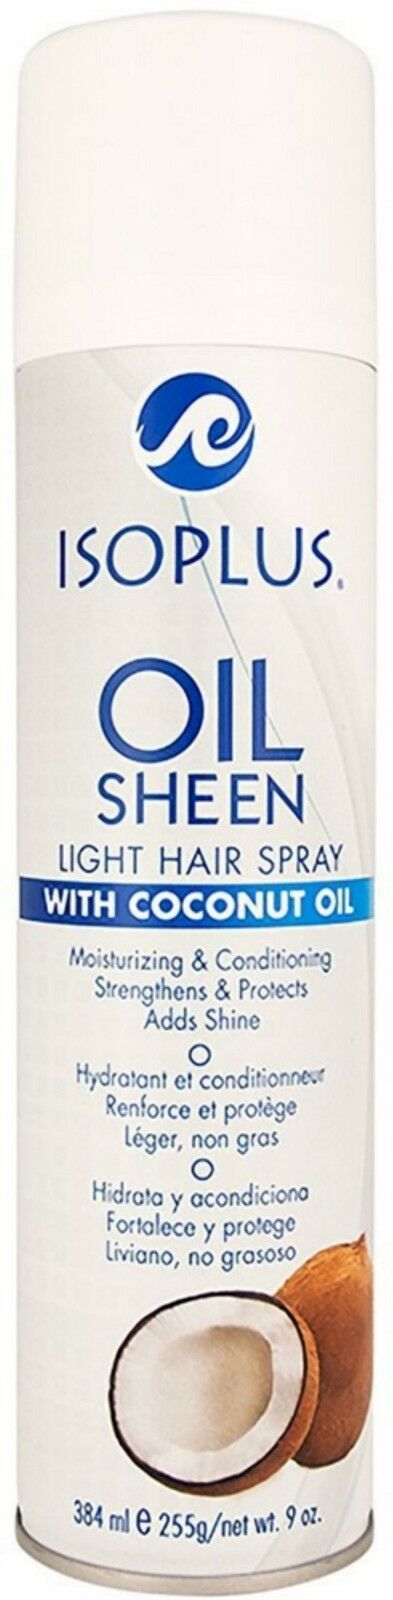 Isoplus Oil Sheen Coconut Oil